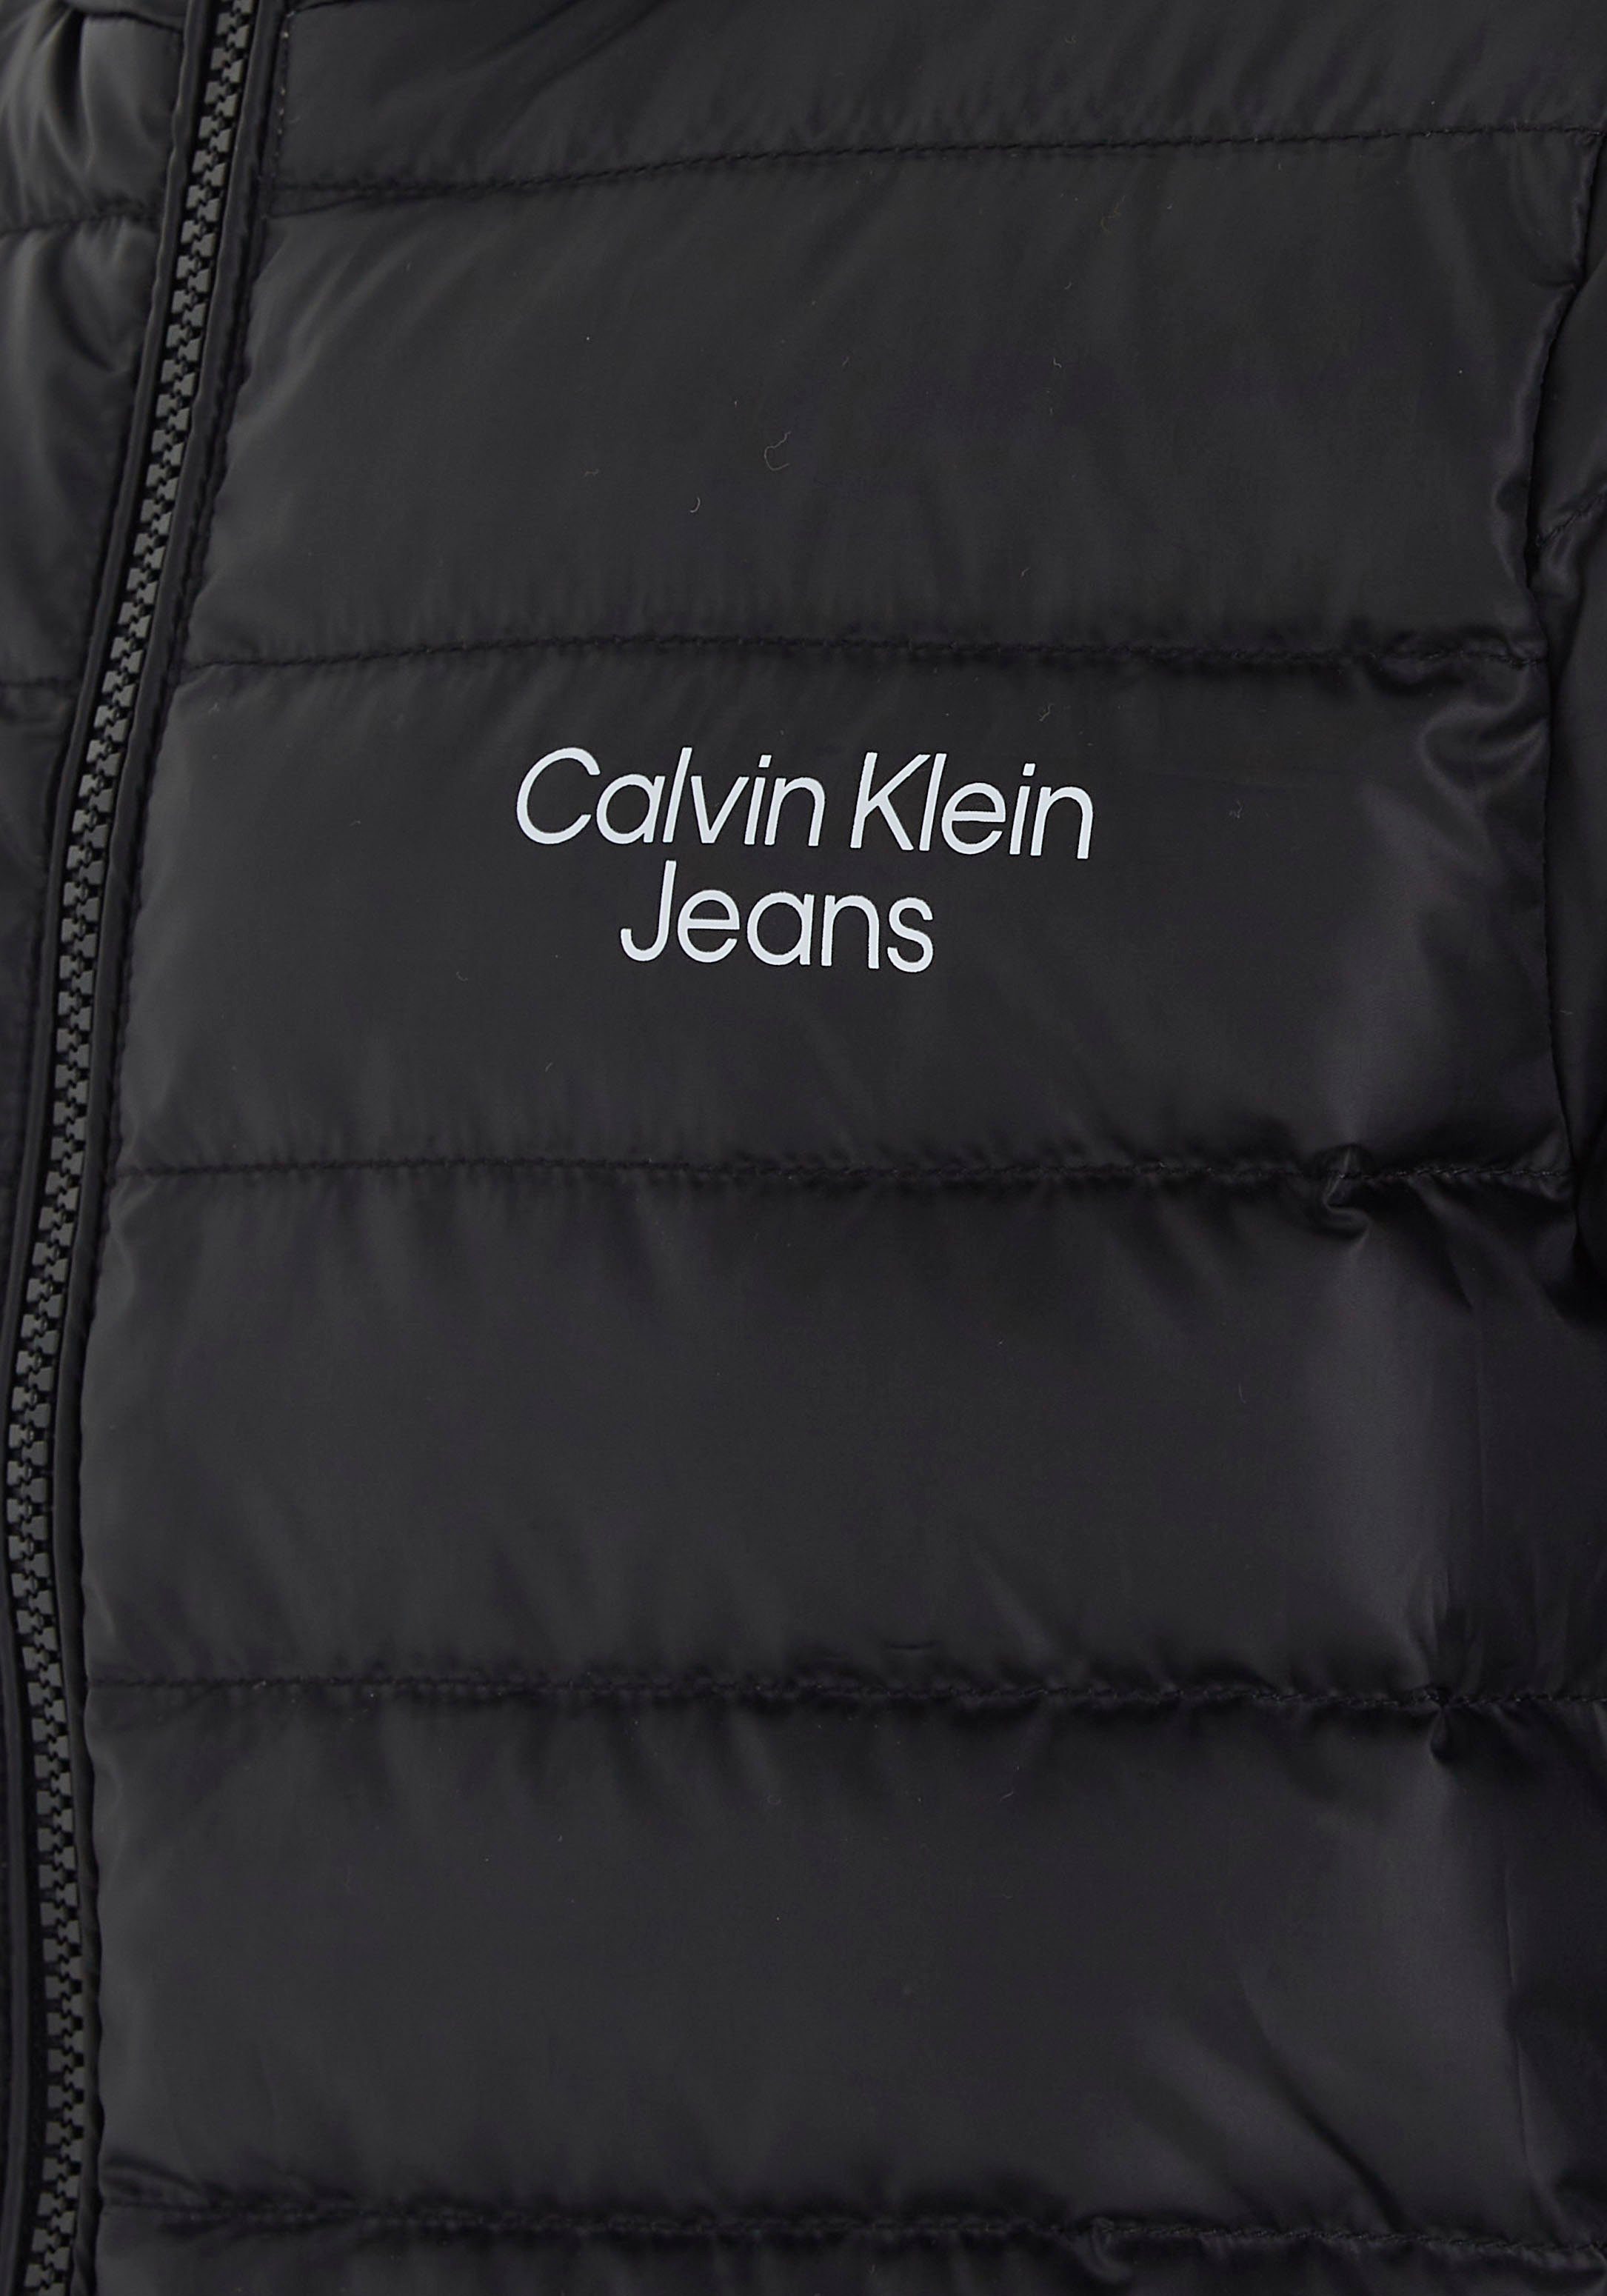 Jeans LW Klein JACKET Calvin DOWN Steppjacke LOGO